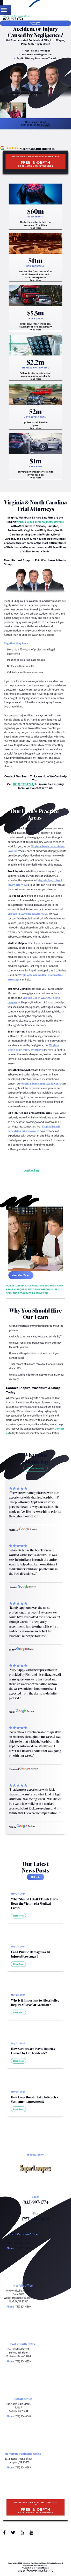 Shapiro, Appleton & Duffan - Hampton VA Lawyers